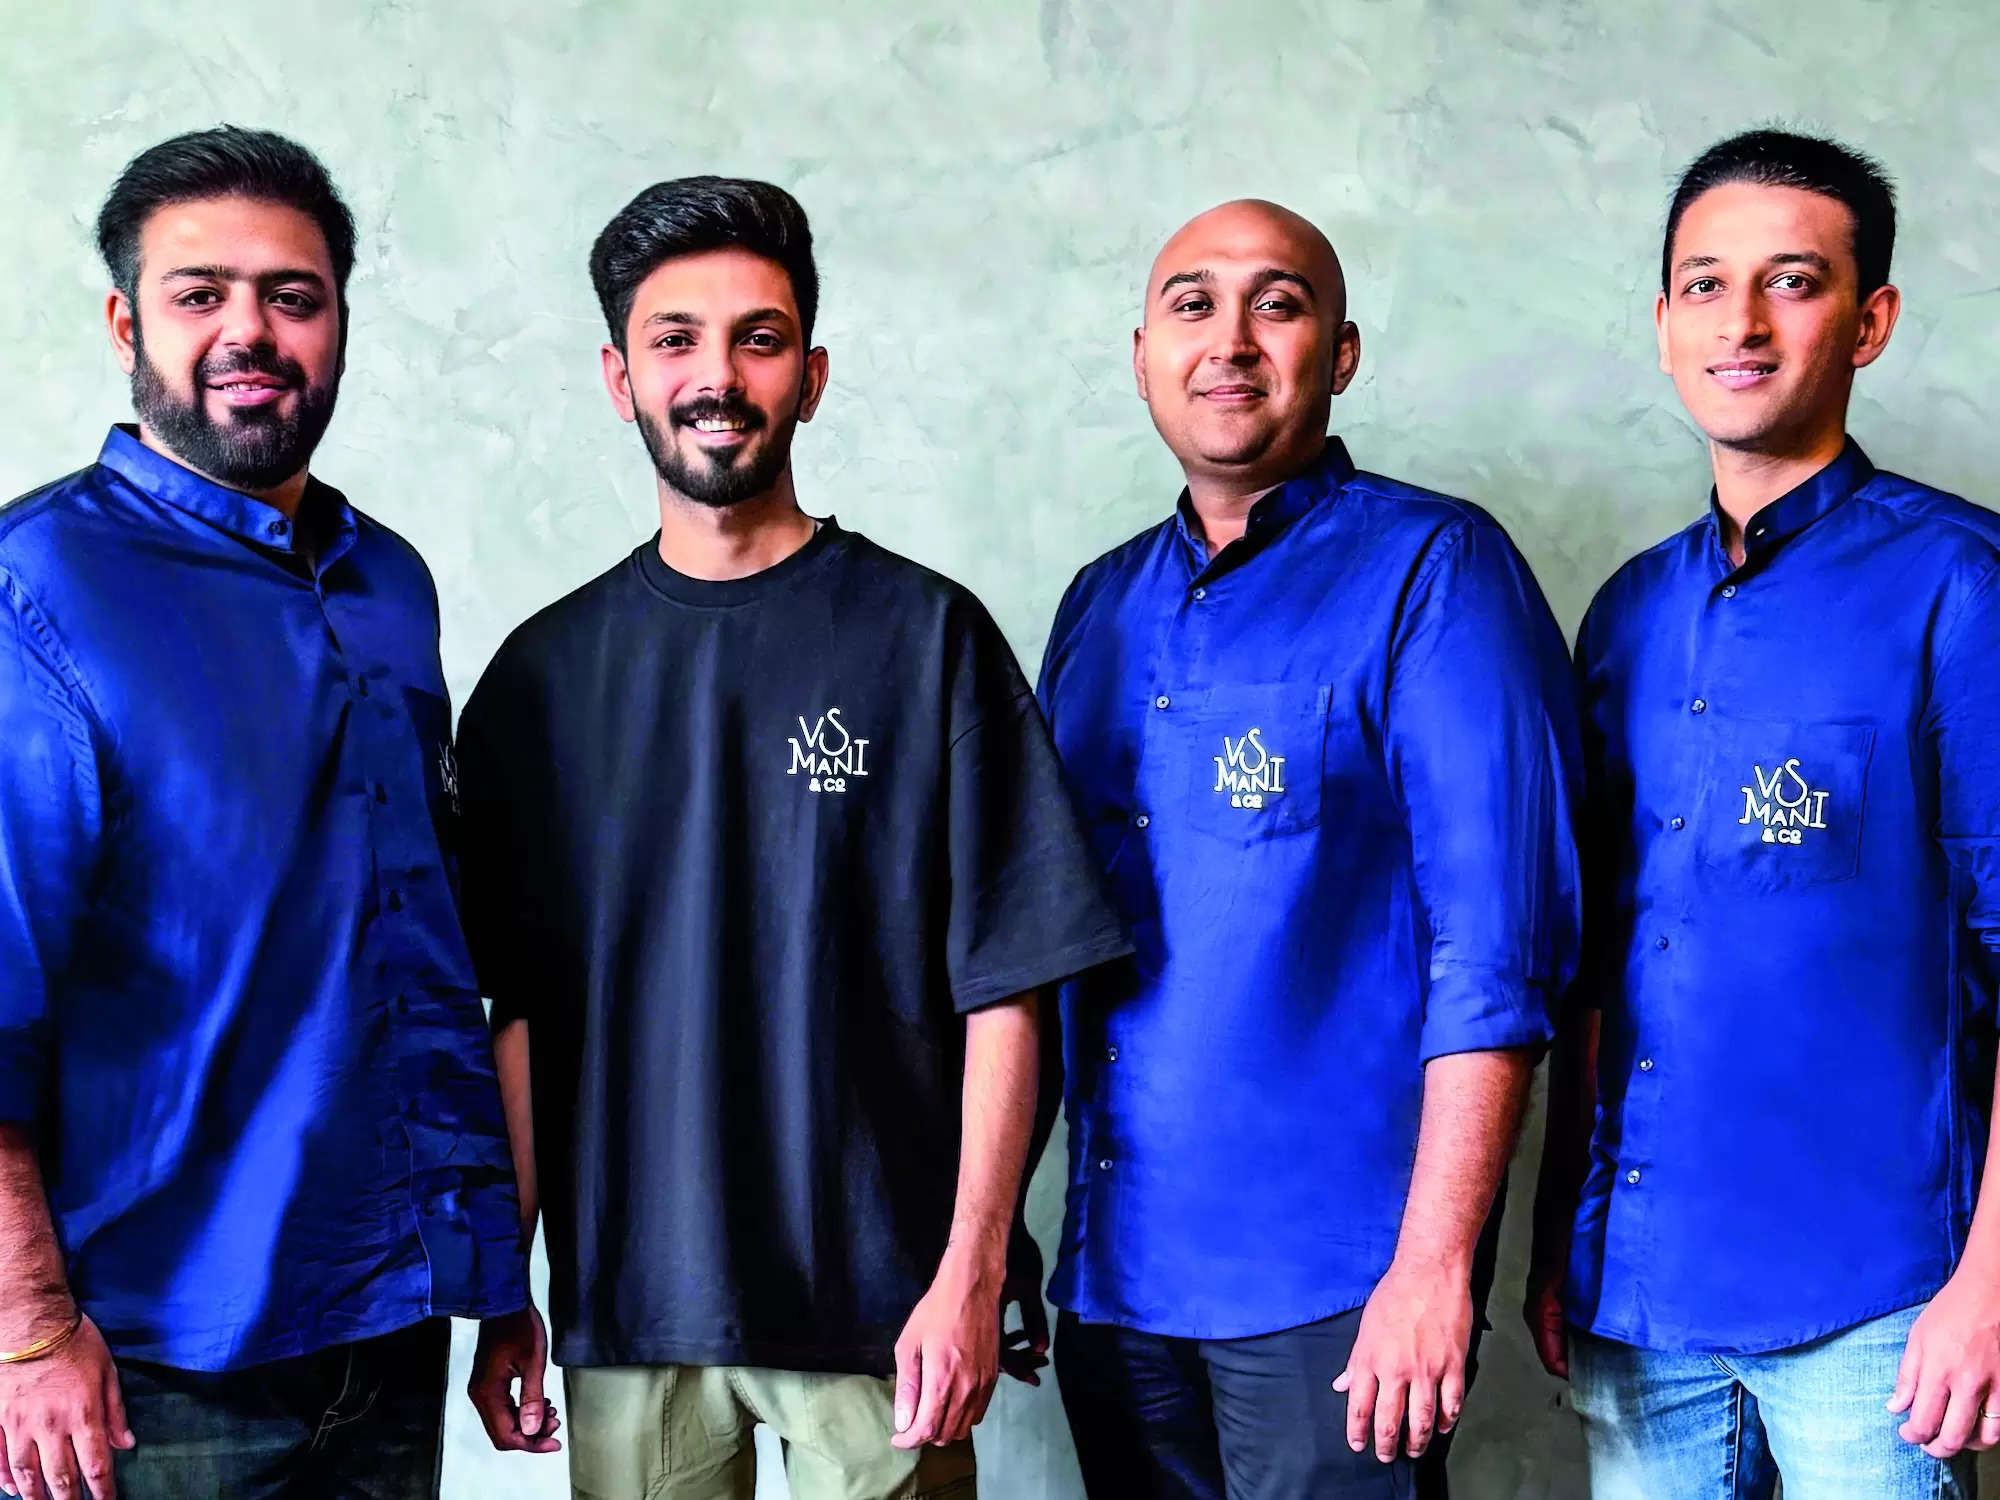 Anirudh Ravichander kicks off startup journey, joins VS Mani & Co